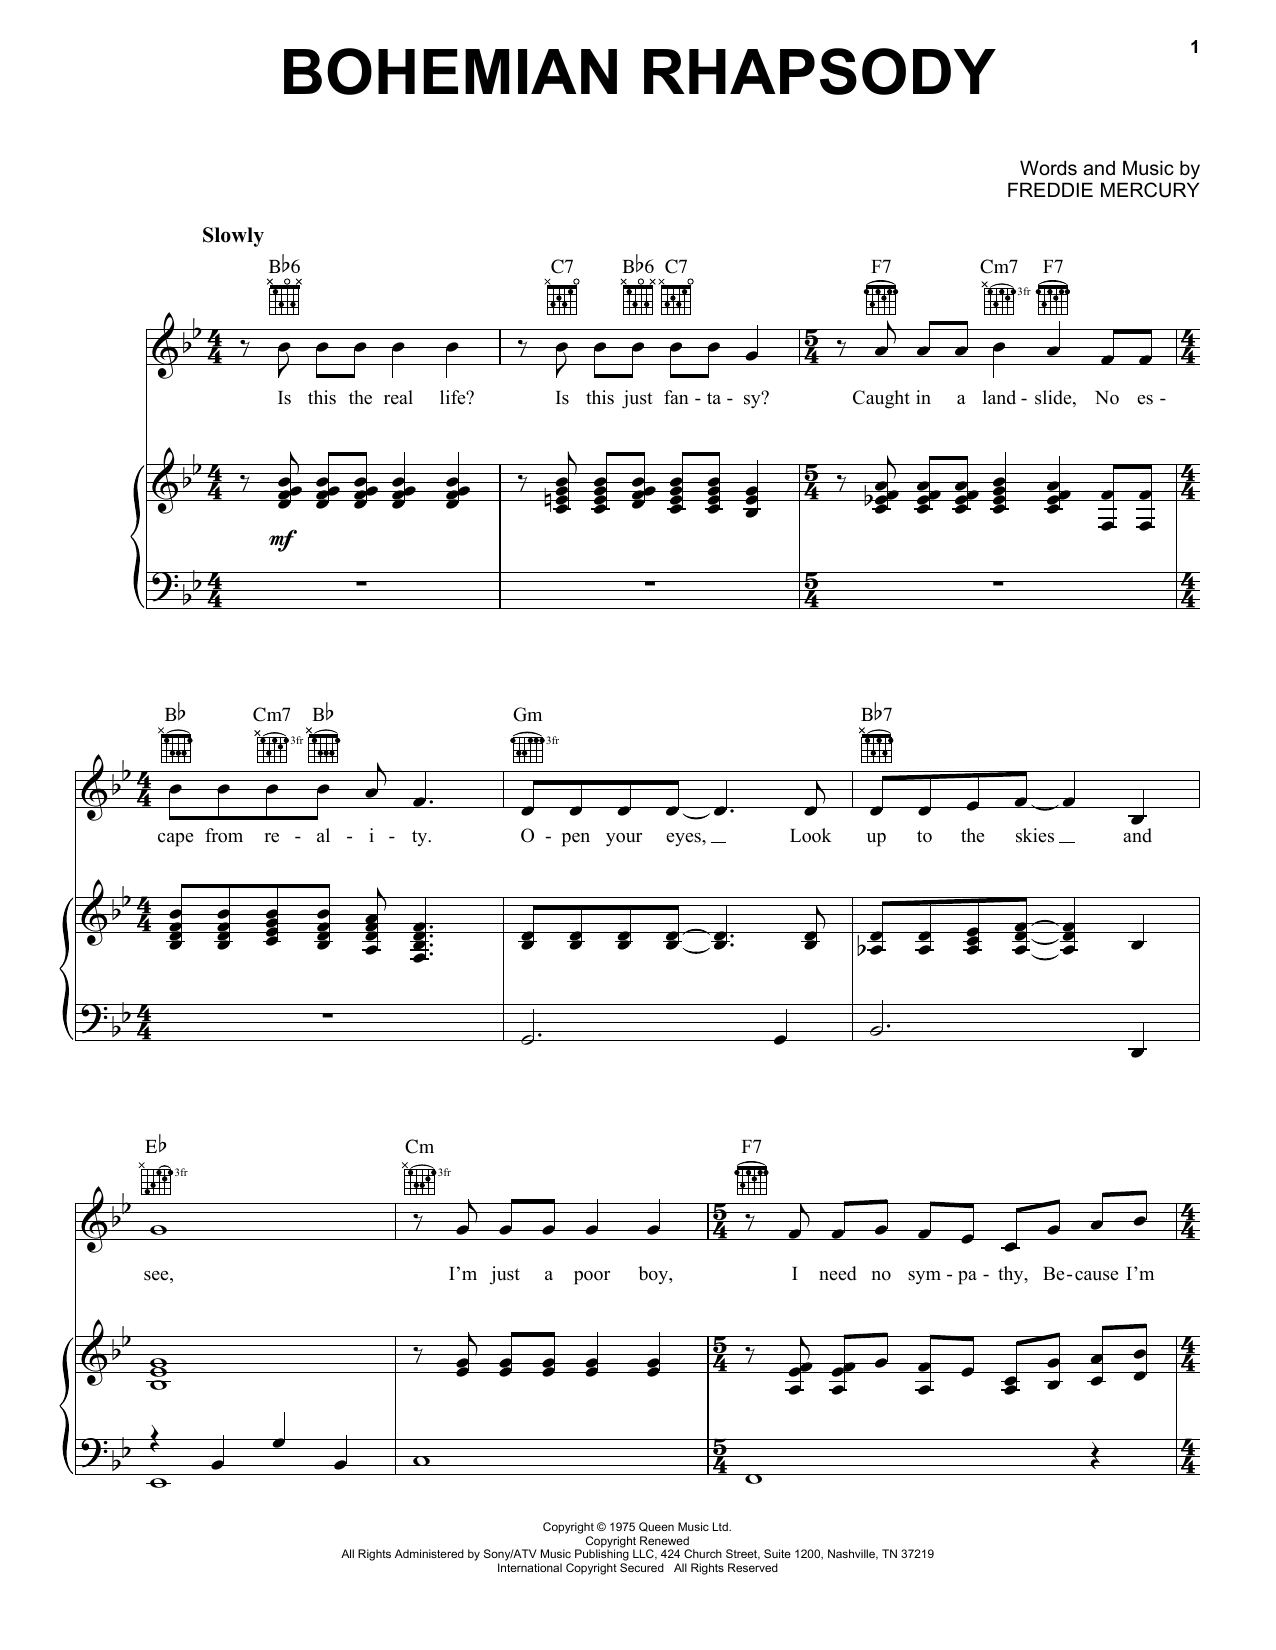 Queen Bohemian Rhapsody Sheet Music Notes & Chords for Guitar Tab - Download or Print PDF